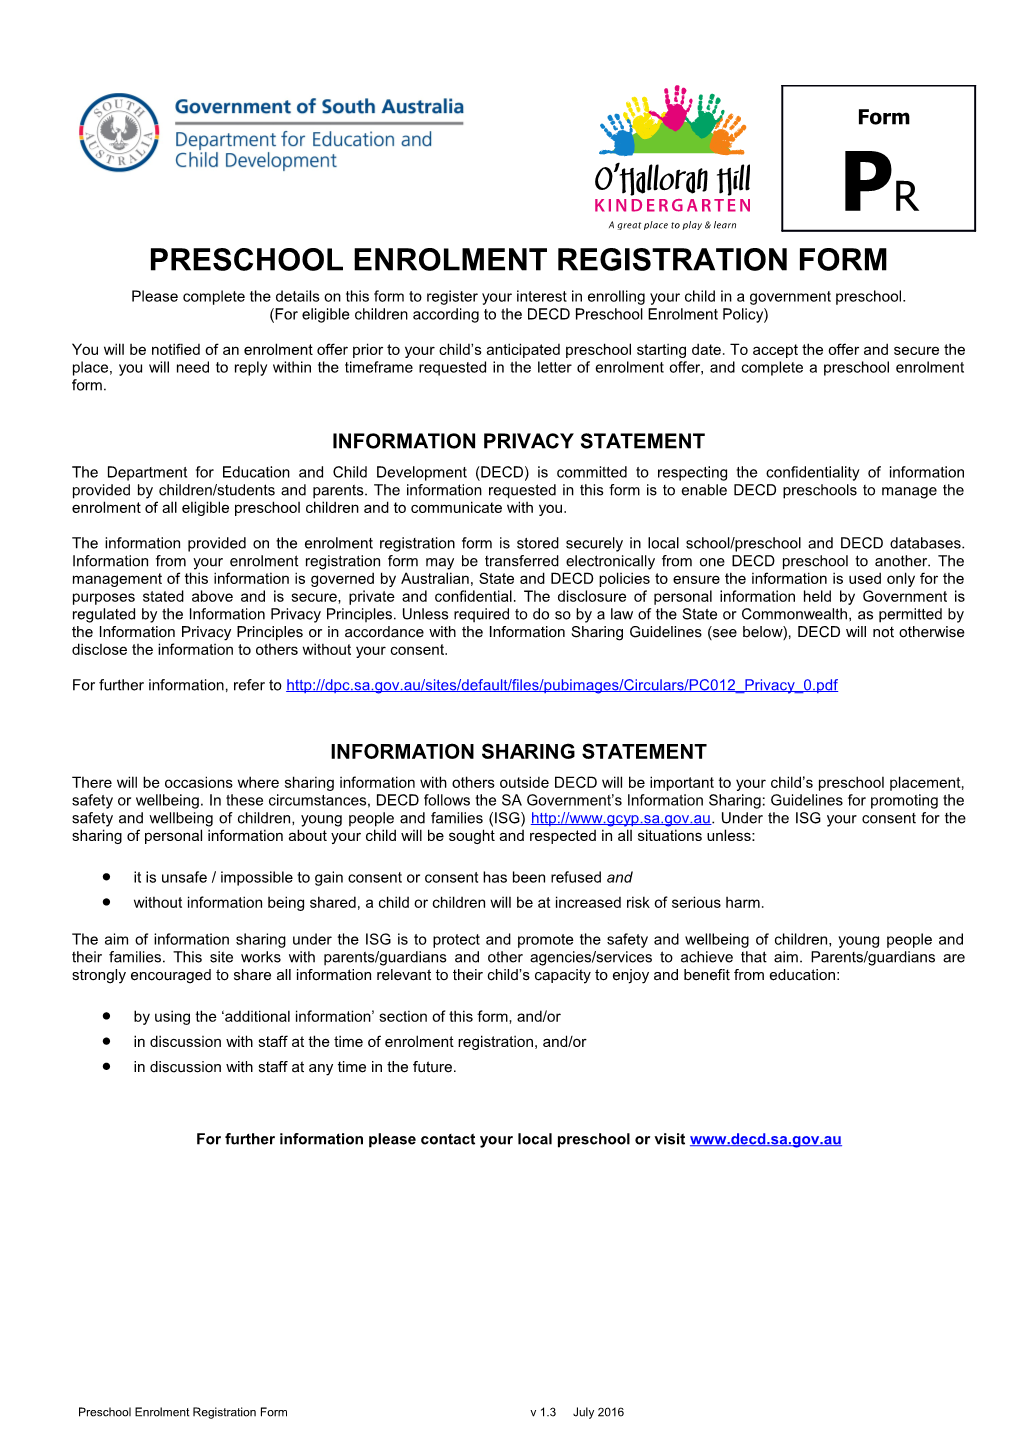 Preschool Enrolment Registration Form- Form PR